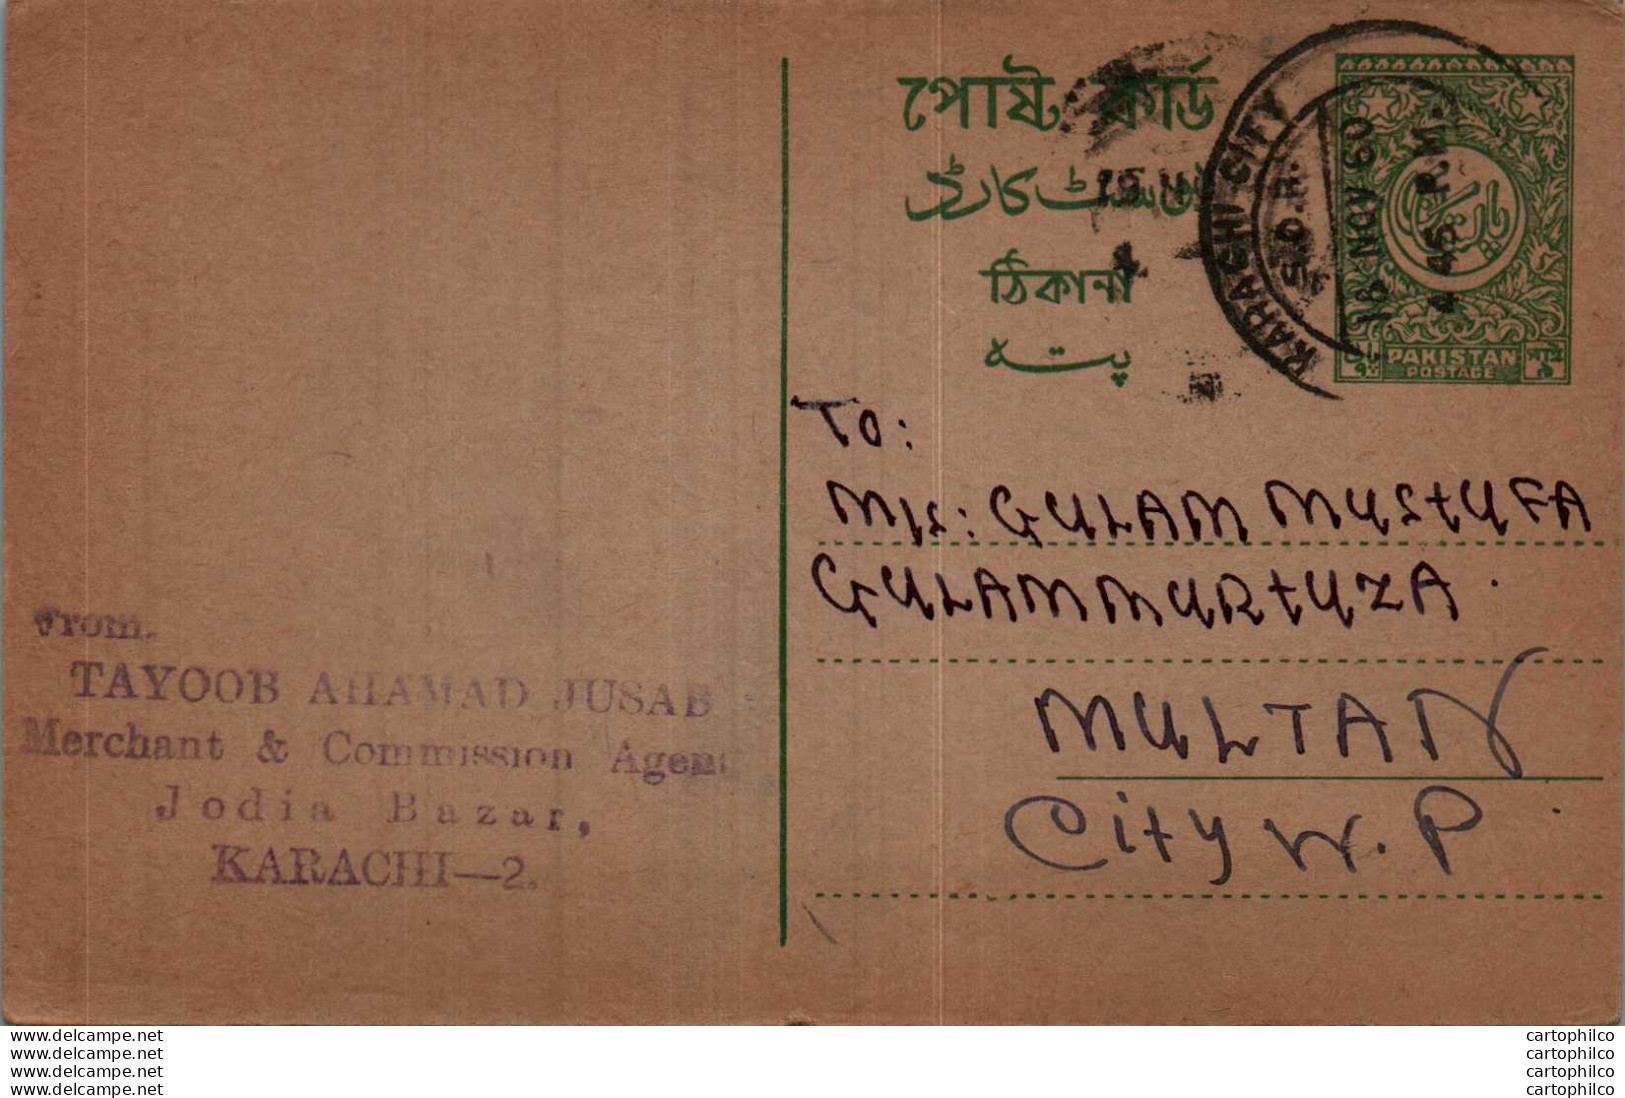 Pakistan Postal Stationery Karachi Cds Tayoor Ahamad Jusab - Pakistan